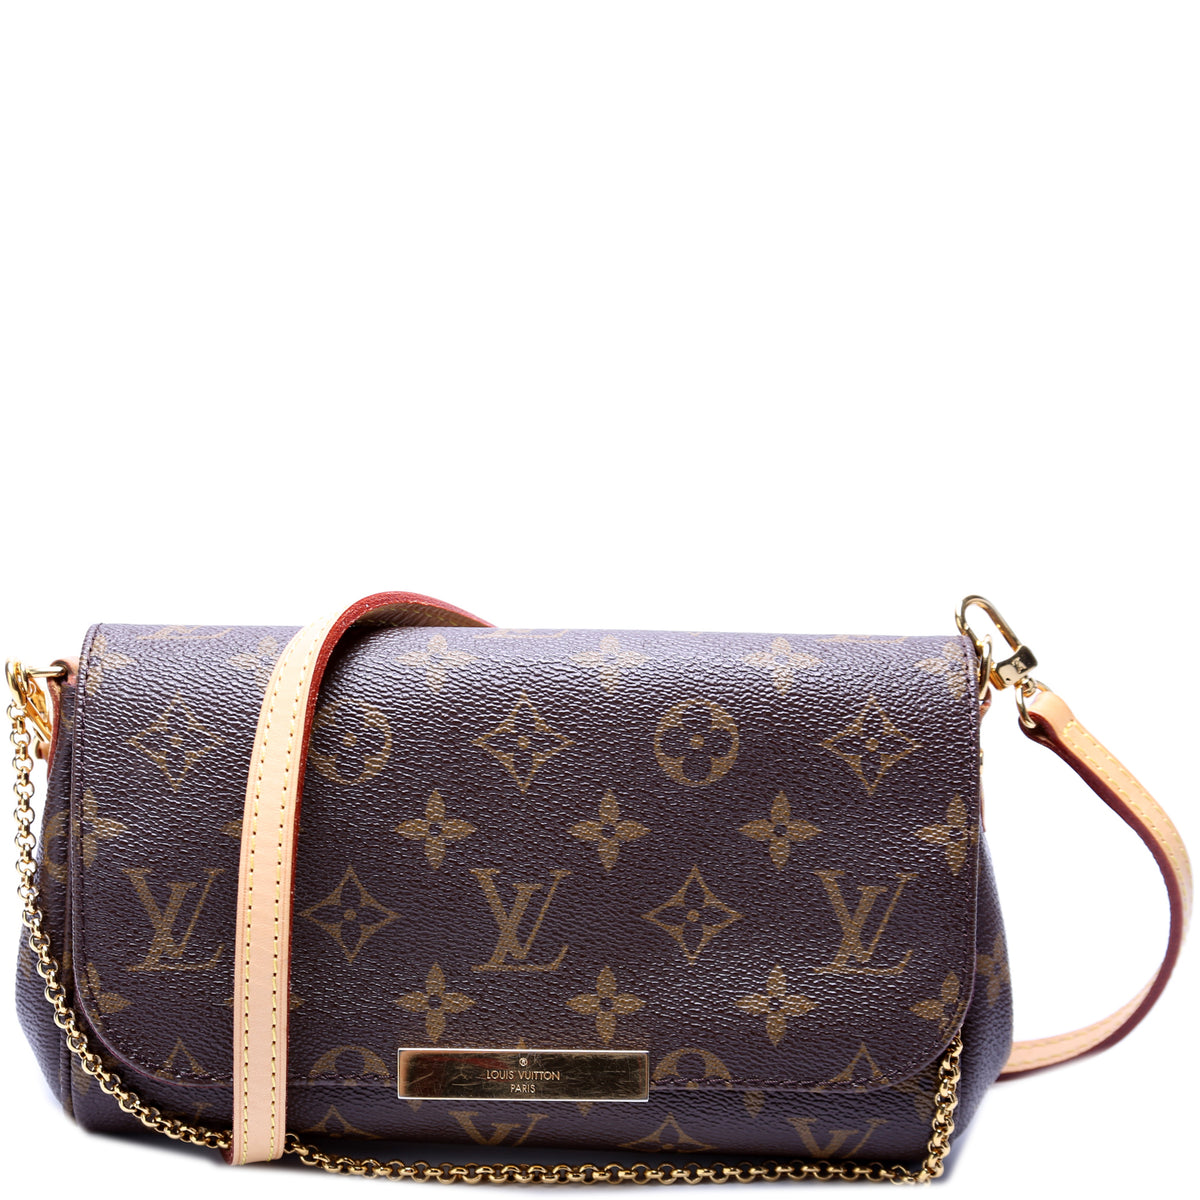 Louis Vuitton Monogram Favorite PM Shoulder Bag - Brown Shoulder